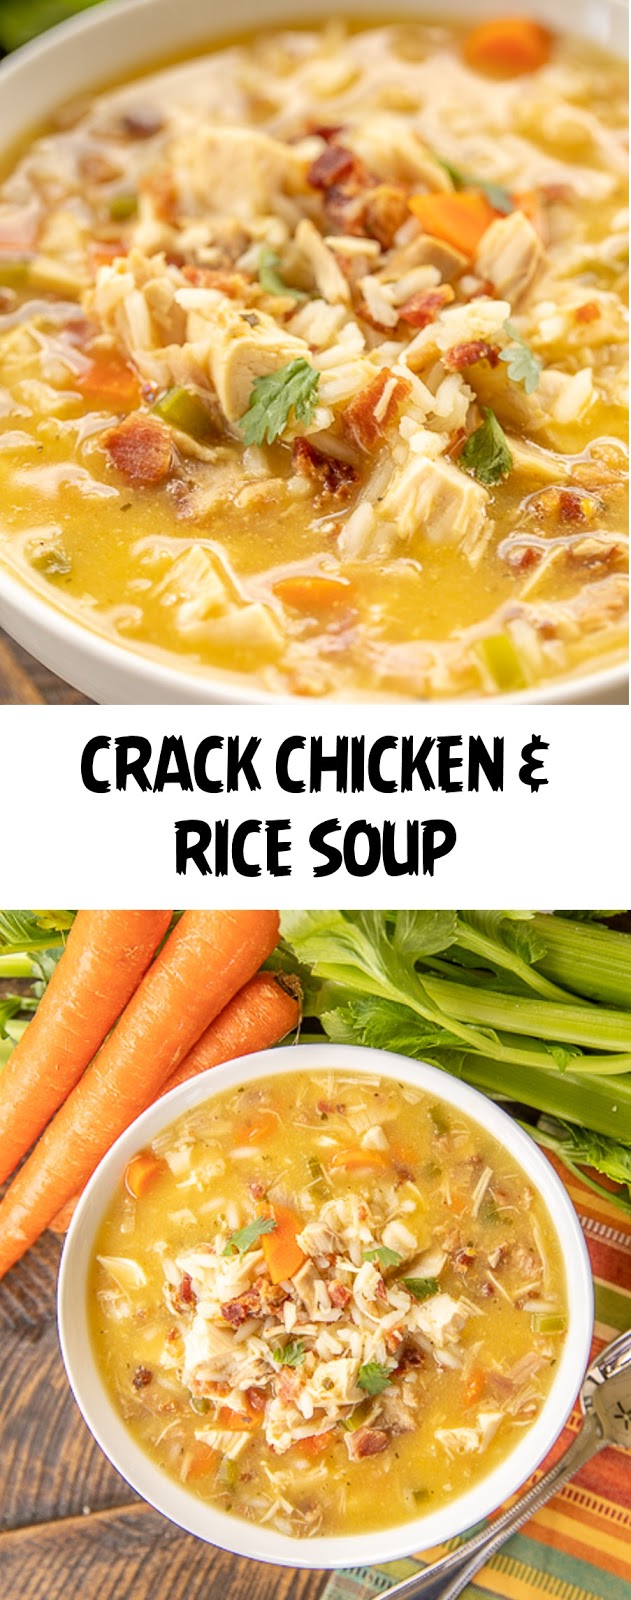 CRACK CHICKEN & RICE SOUP